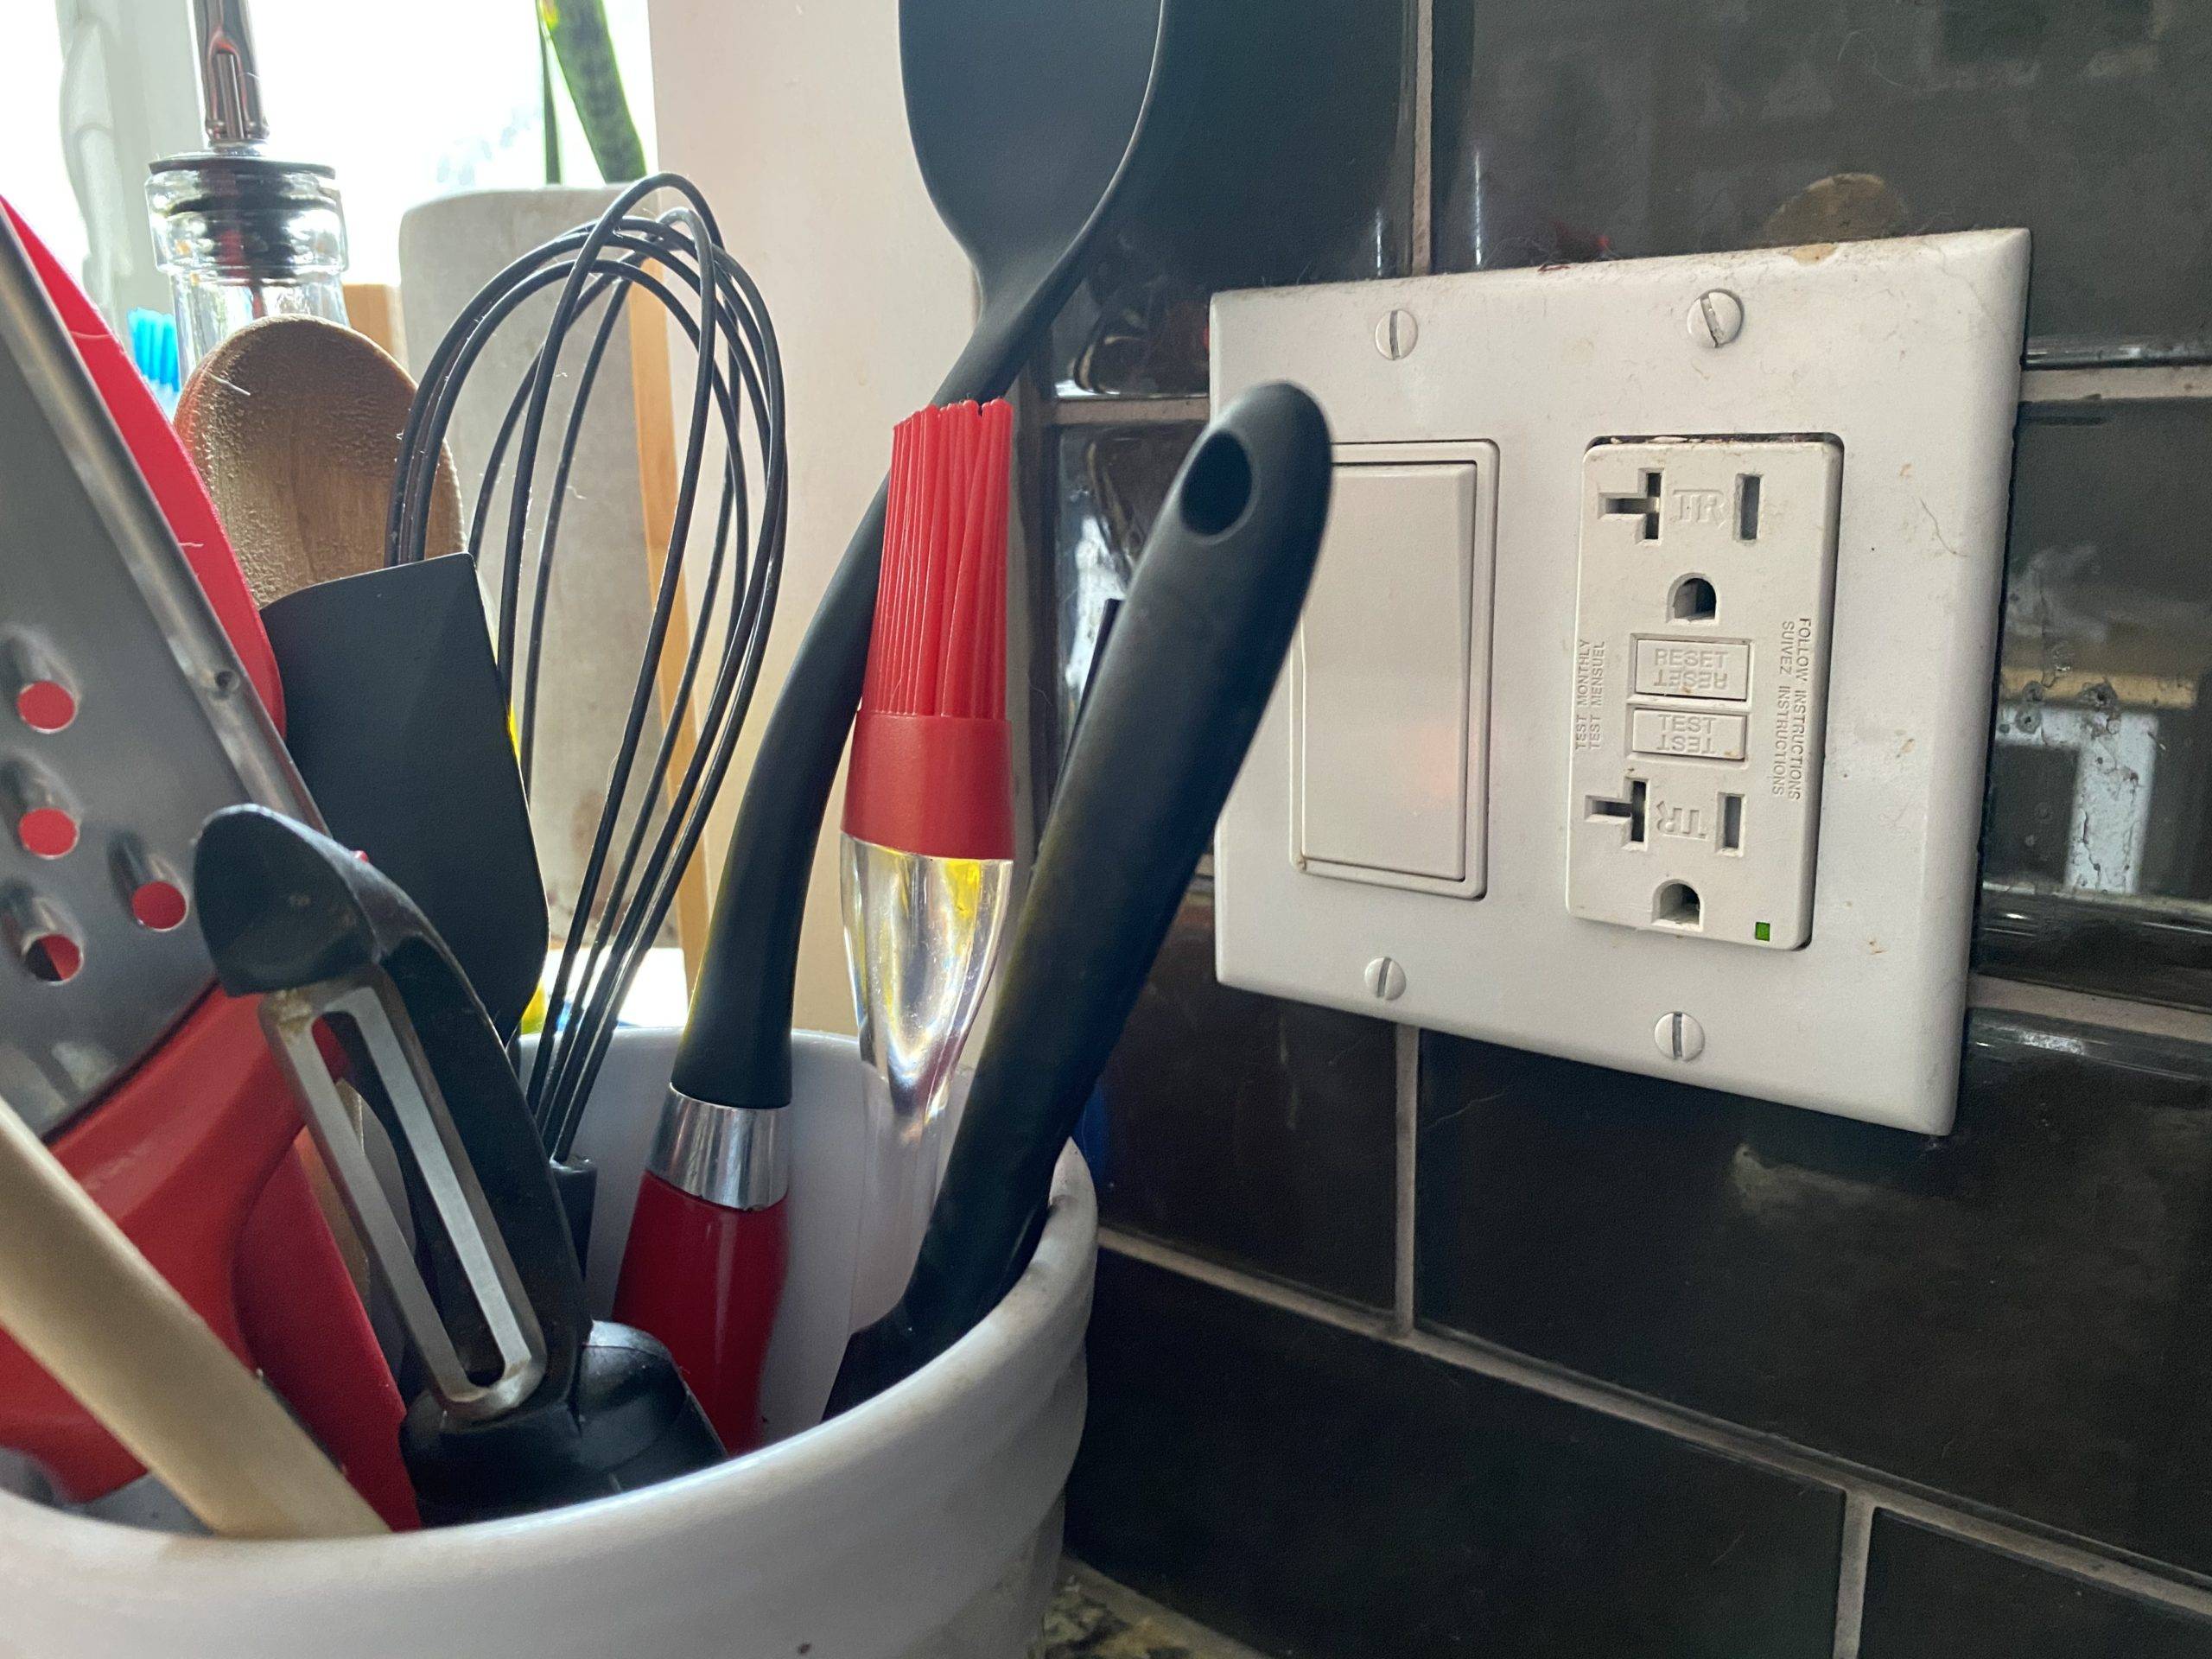 gfci outlet near kitchen utensils